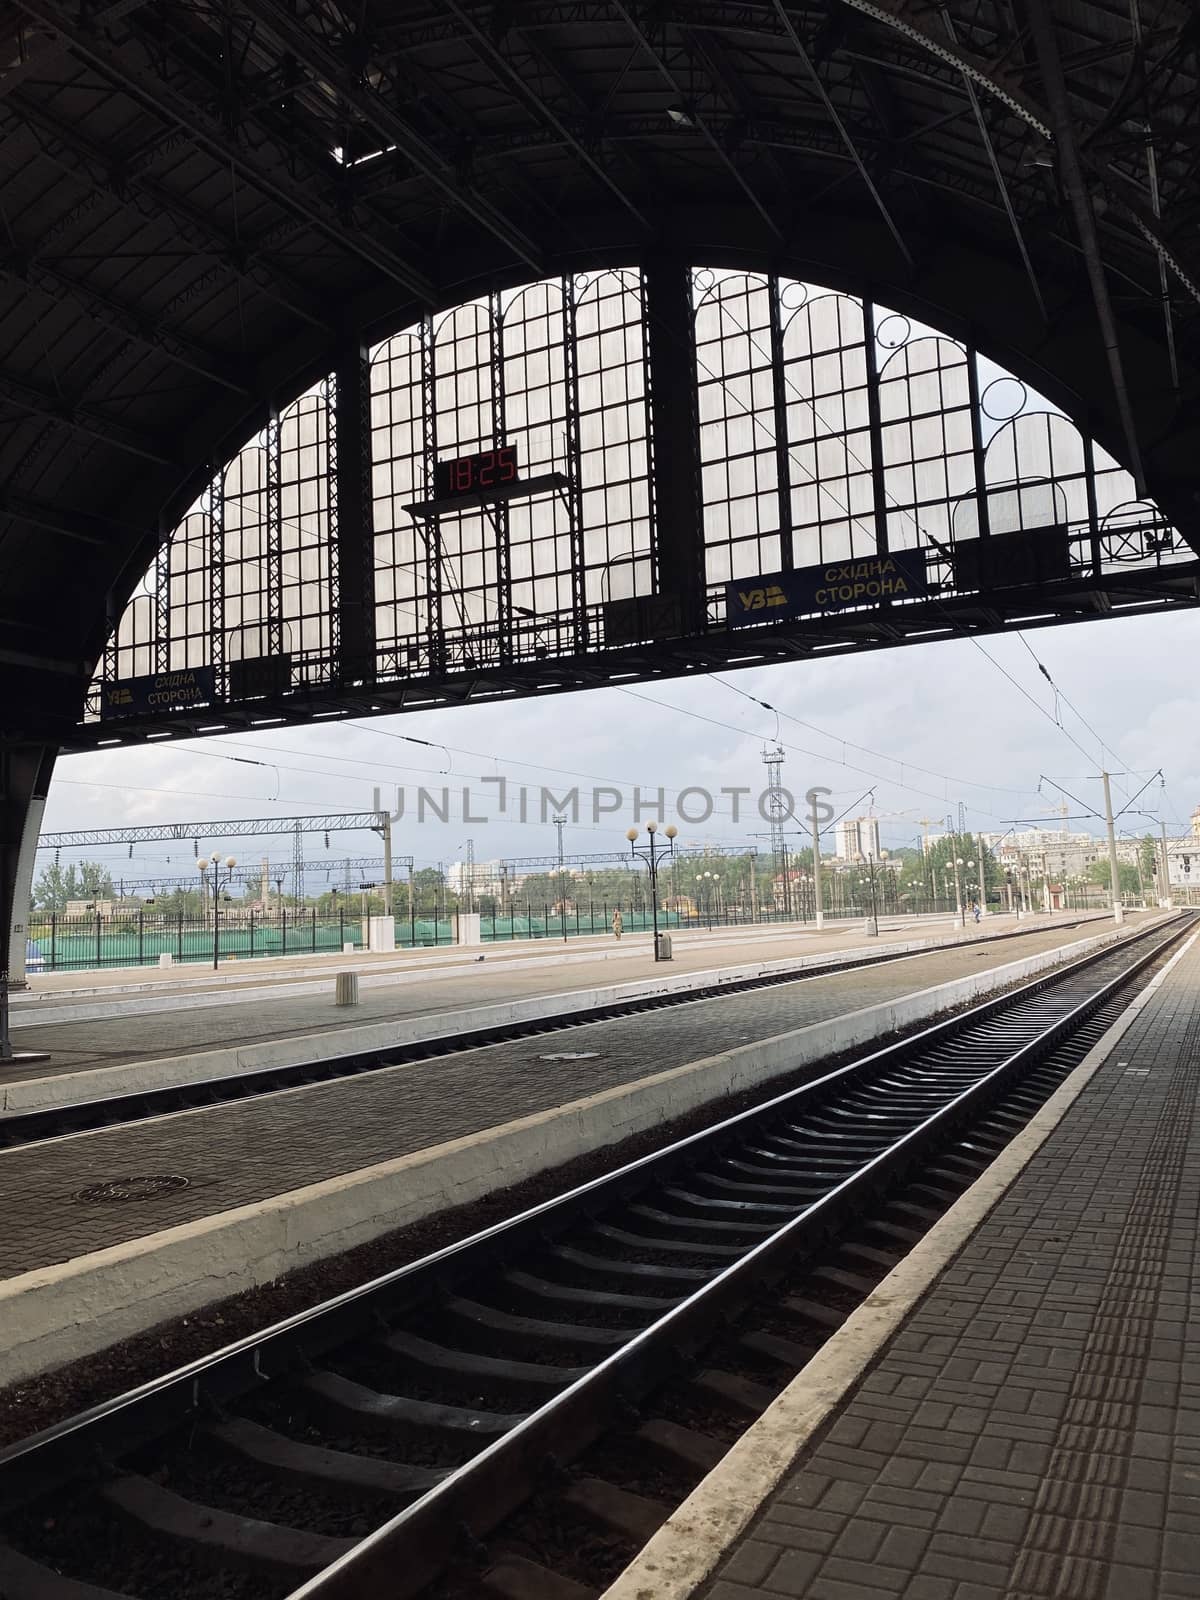 railway station platform in the morning